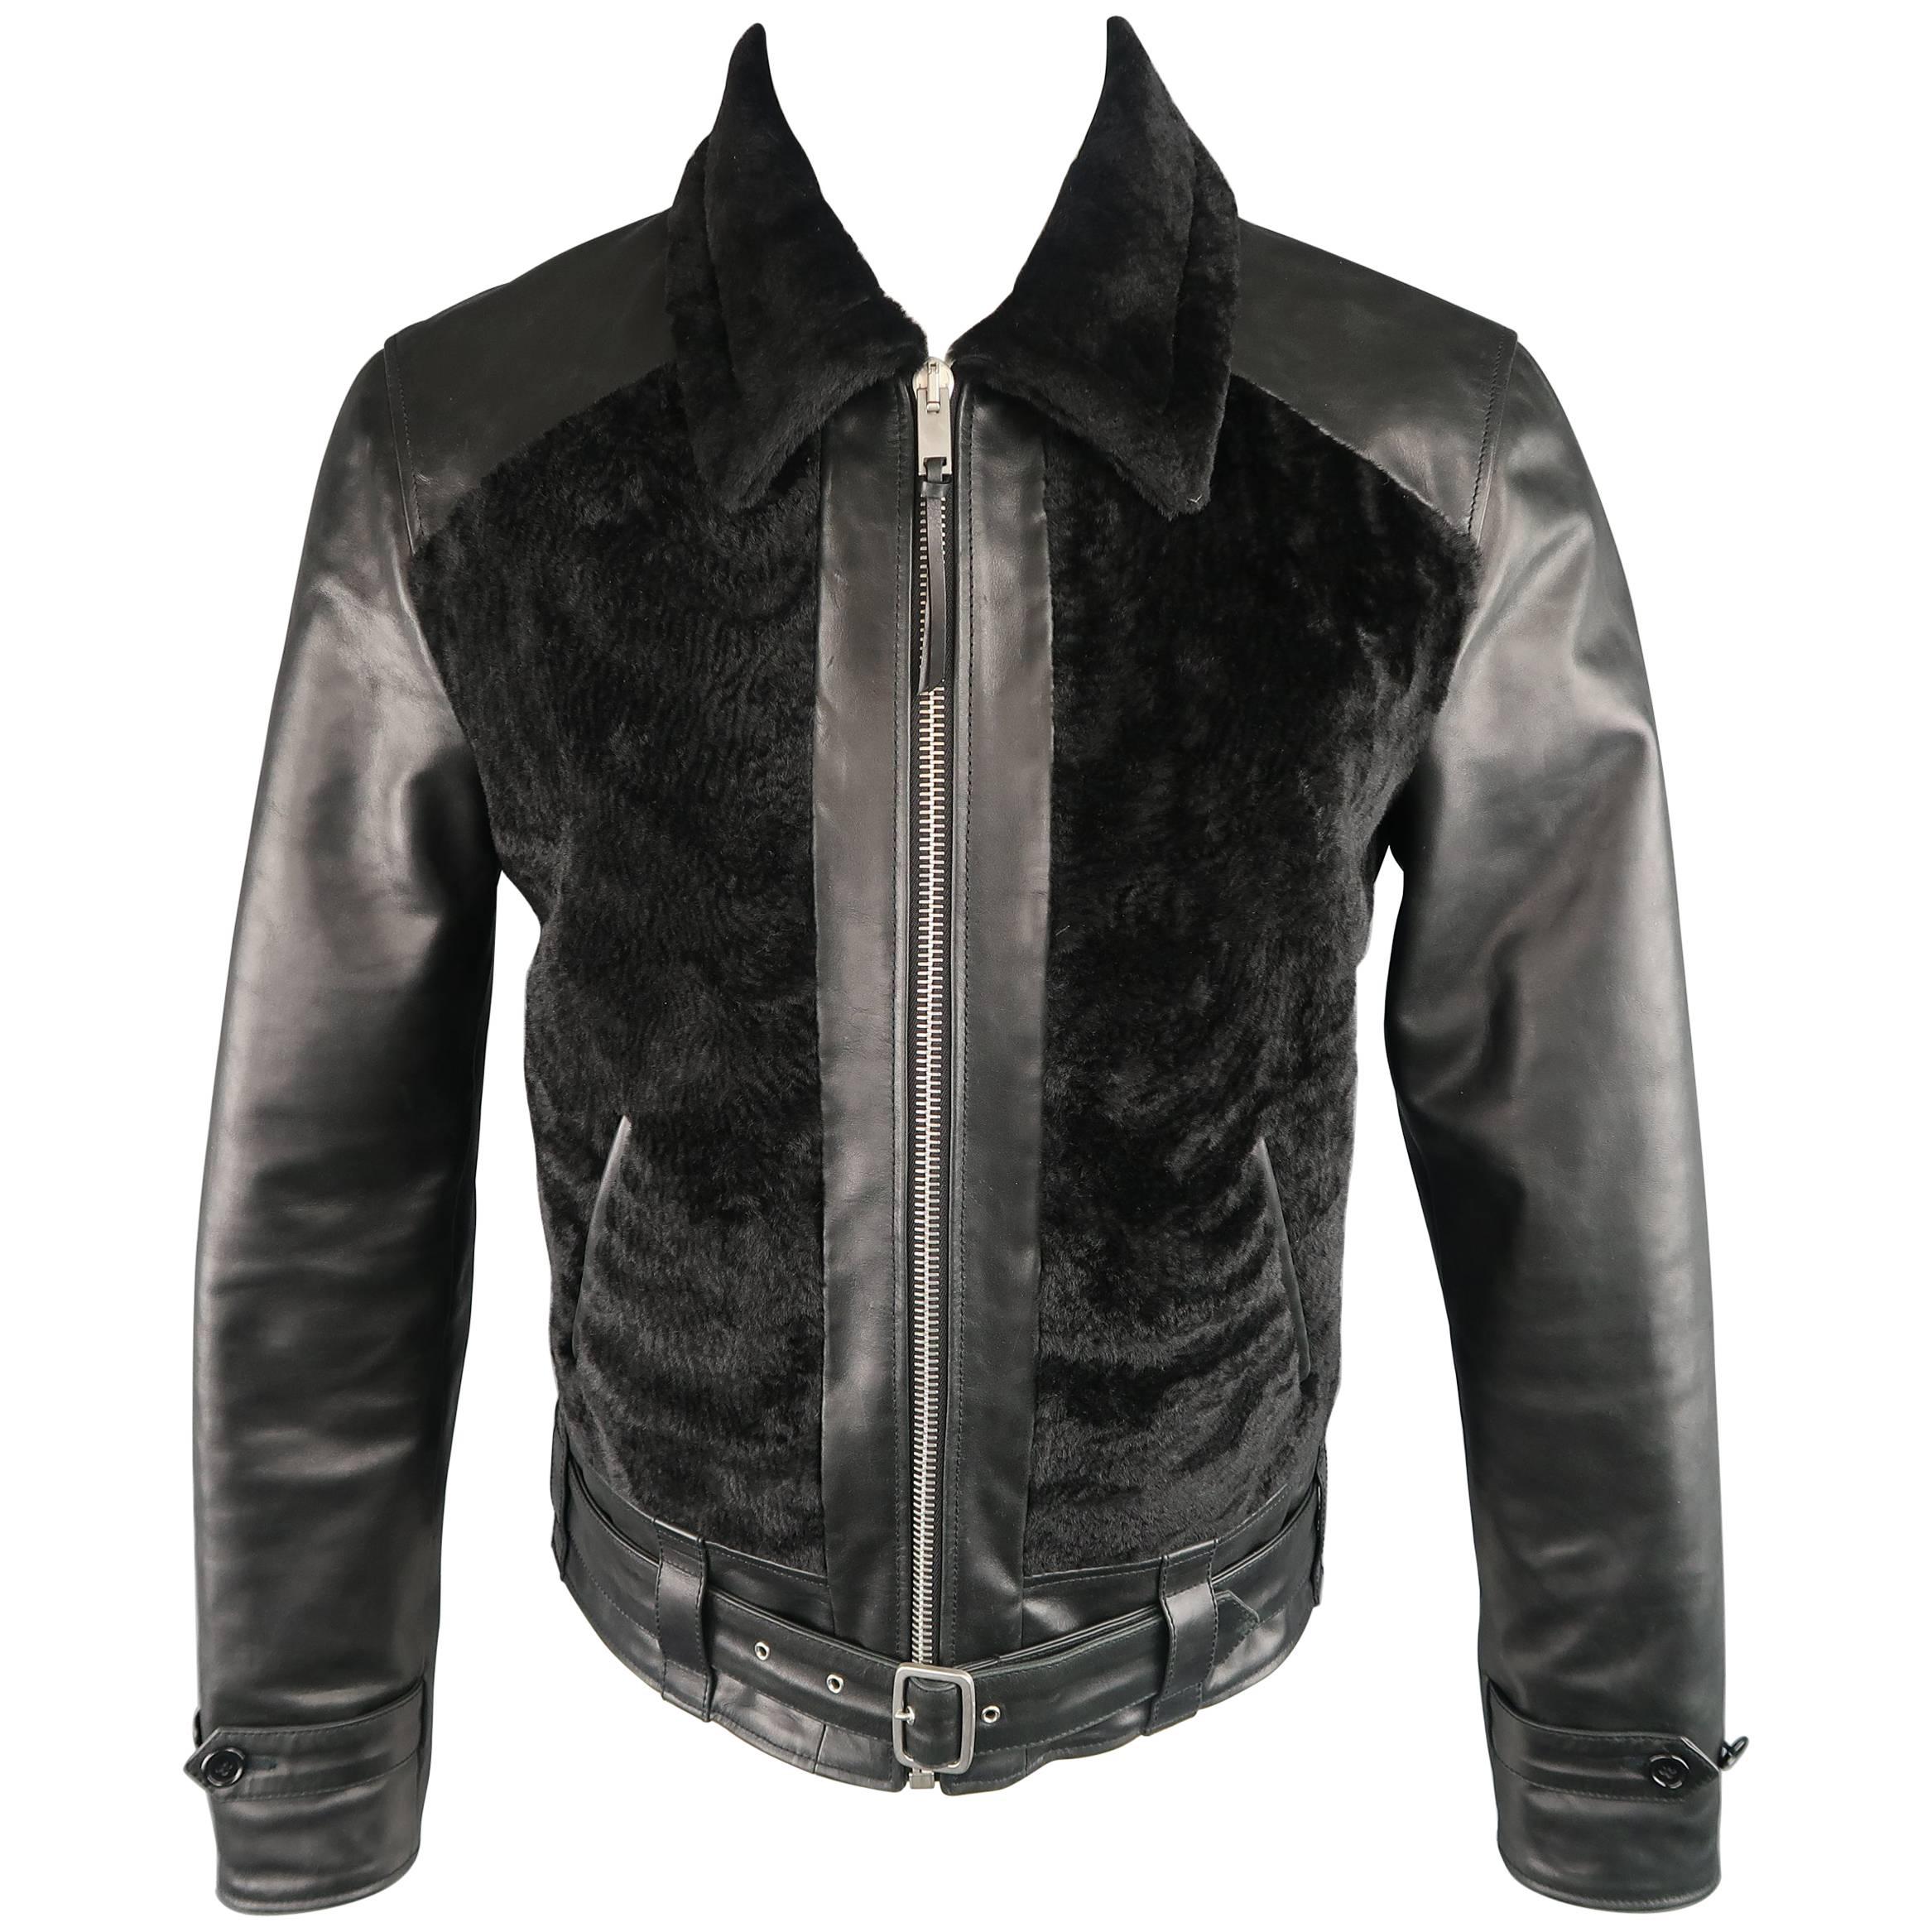 Alexander McQueen Jacket Men's Black Leather and Shearling Coat